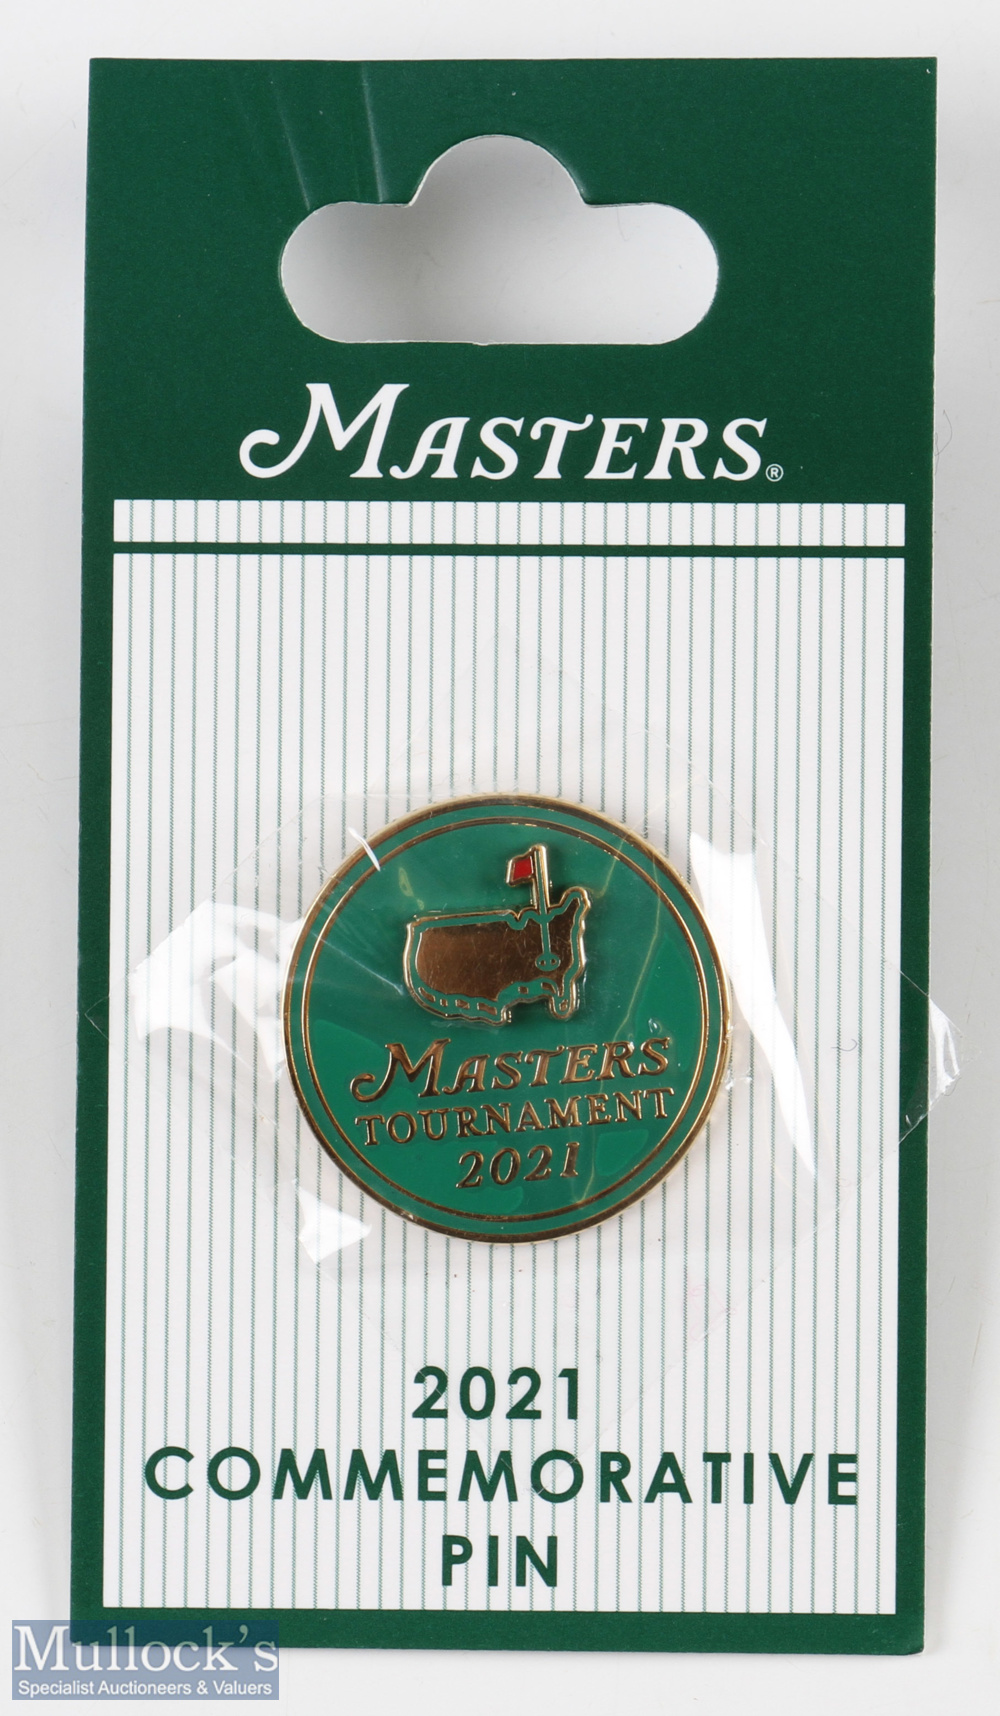 2021 Masters Golf Tournament Commemorative enamel pin badge - won by Hideki Matsuyama, the first